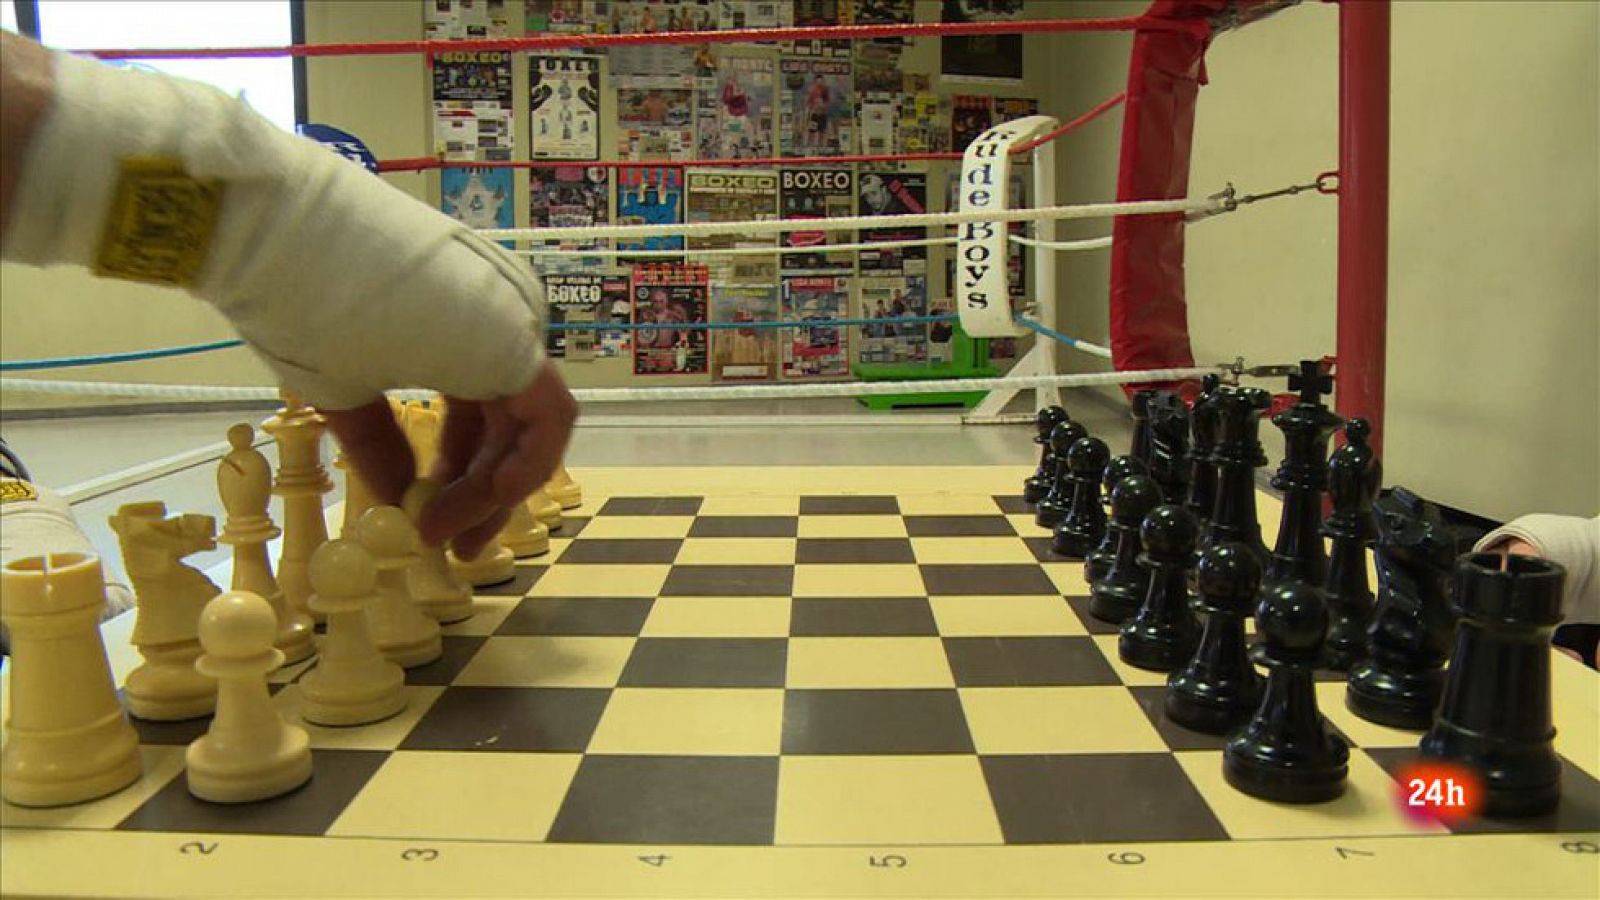 Repor: ¿A qué estás jugando? - Chess-boxing | RTVE Play